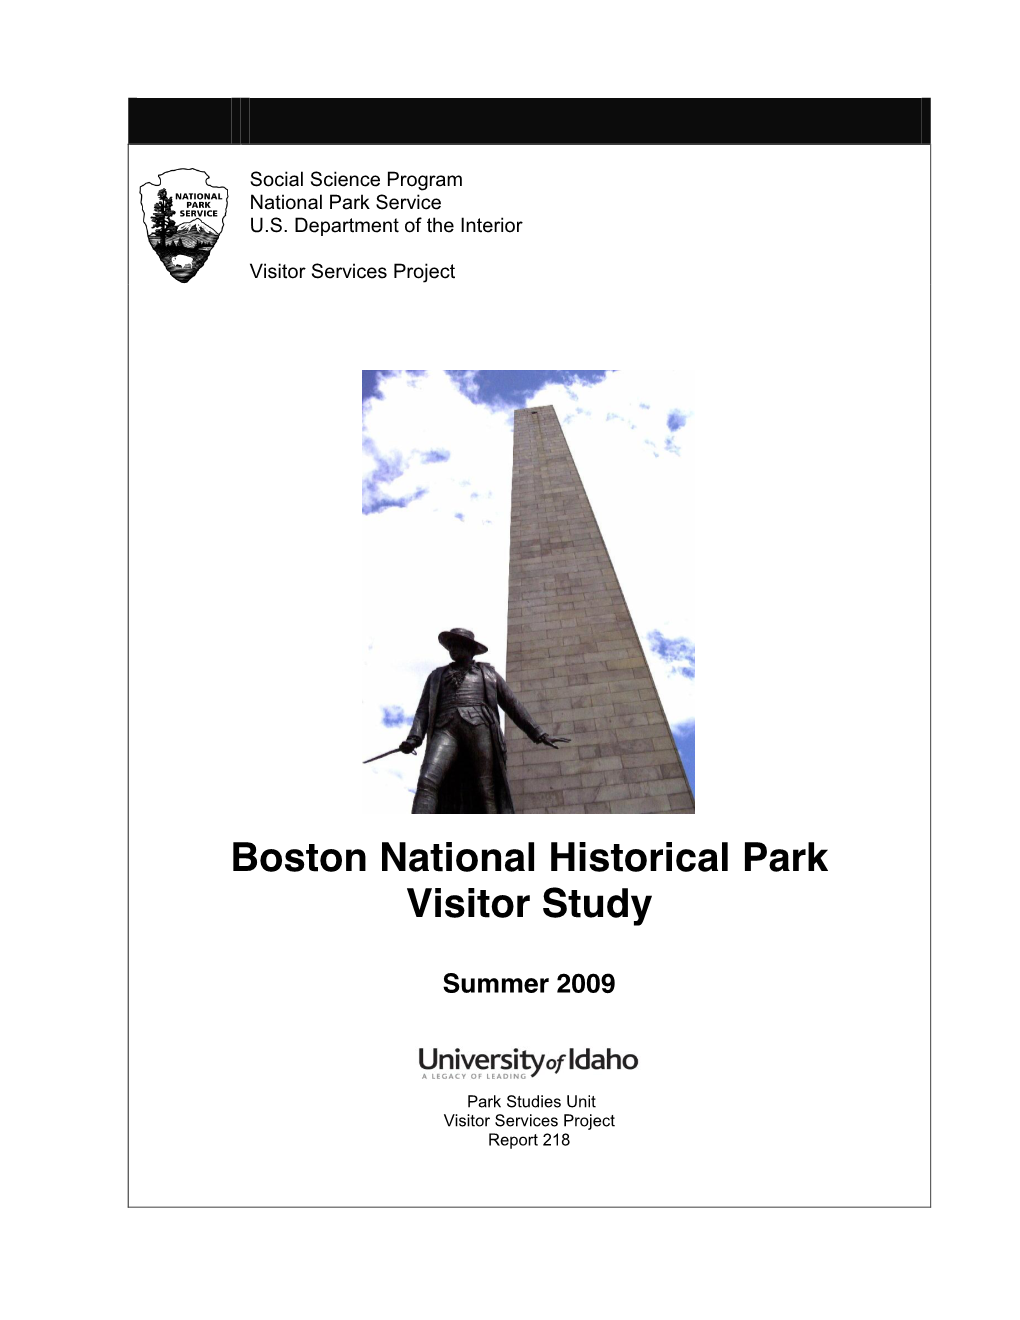 Boston National Historical Park Visitor Study